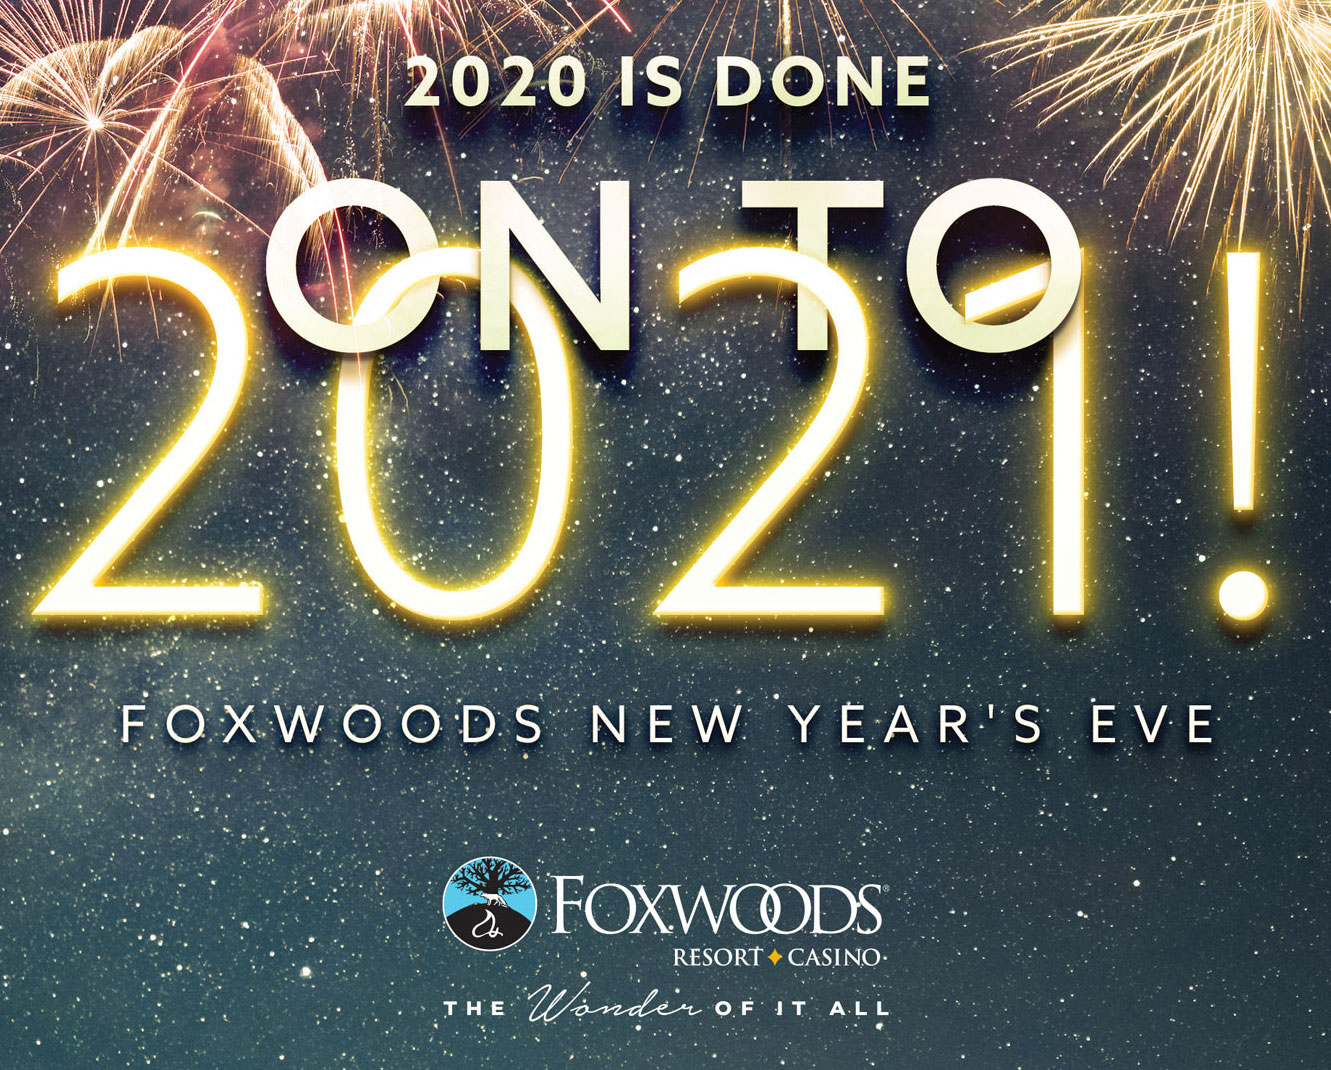 2020 Foxwoods New Year's Eve Celebrations